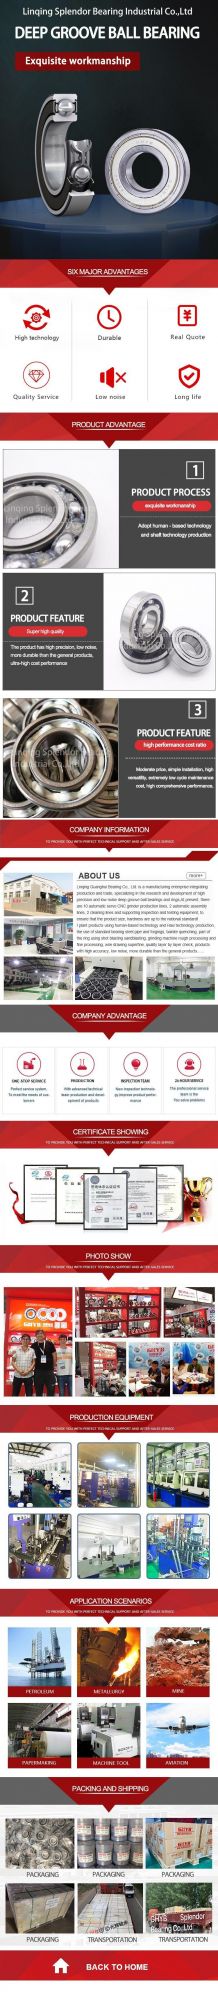 China Factory Distributor Supplier of Deep Groove Ball Bearings for Motors, Compressors, Alternators 6000-2rz/Z2V2